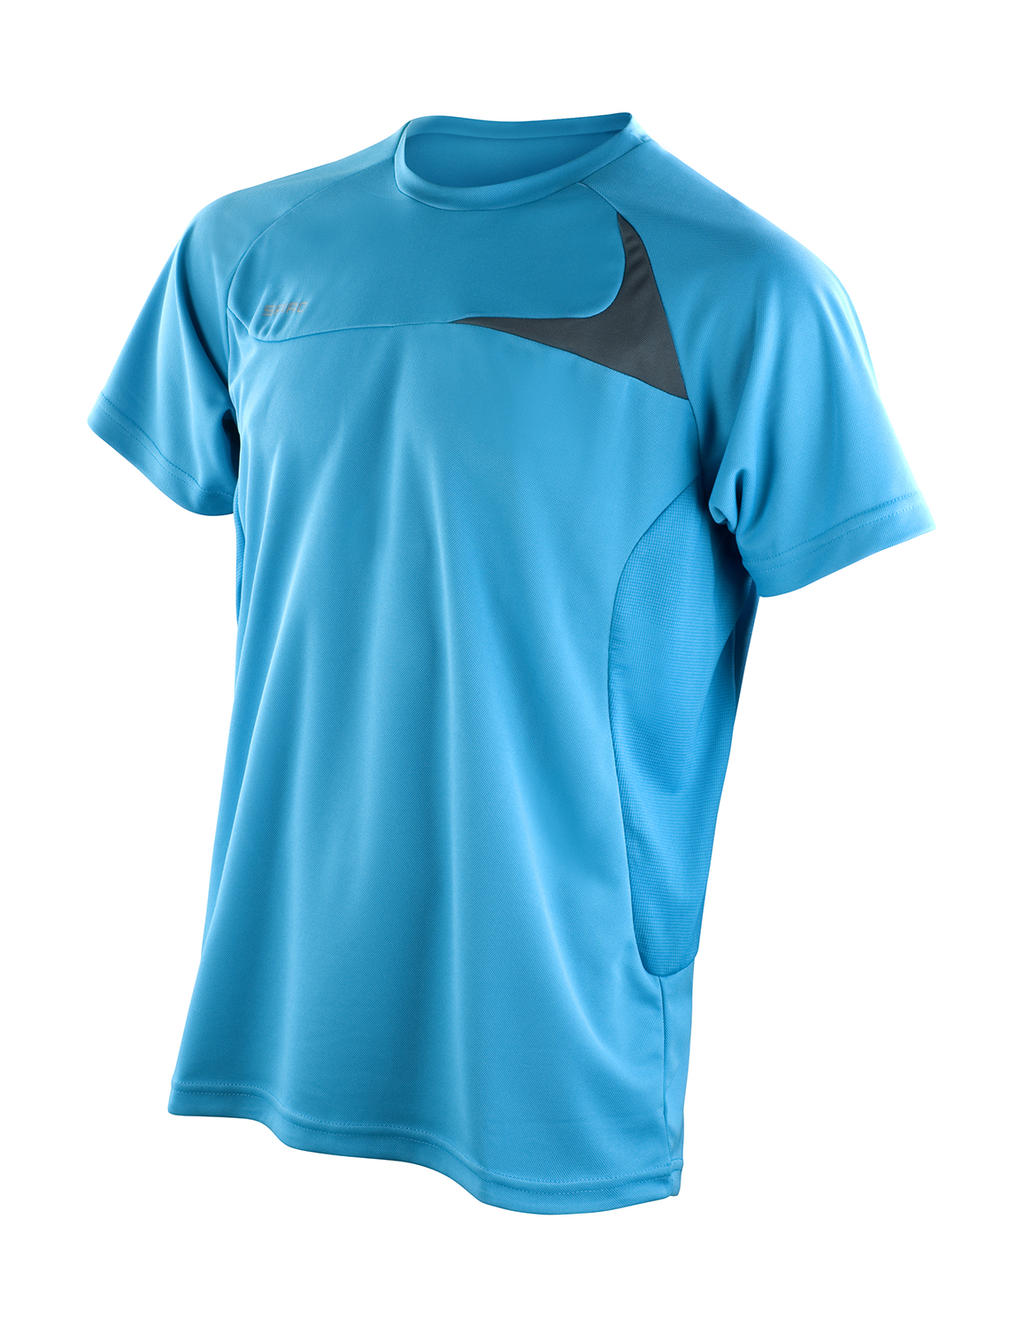  Spiro Mens Dash Training Shirt in Farbe Aqua/Grey